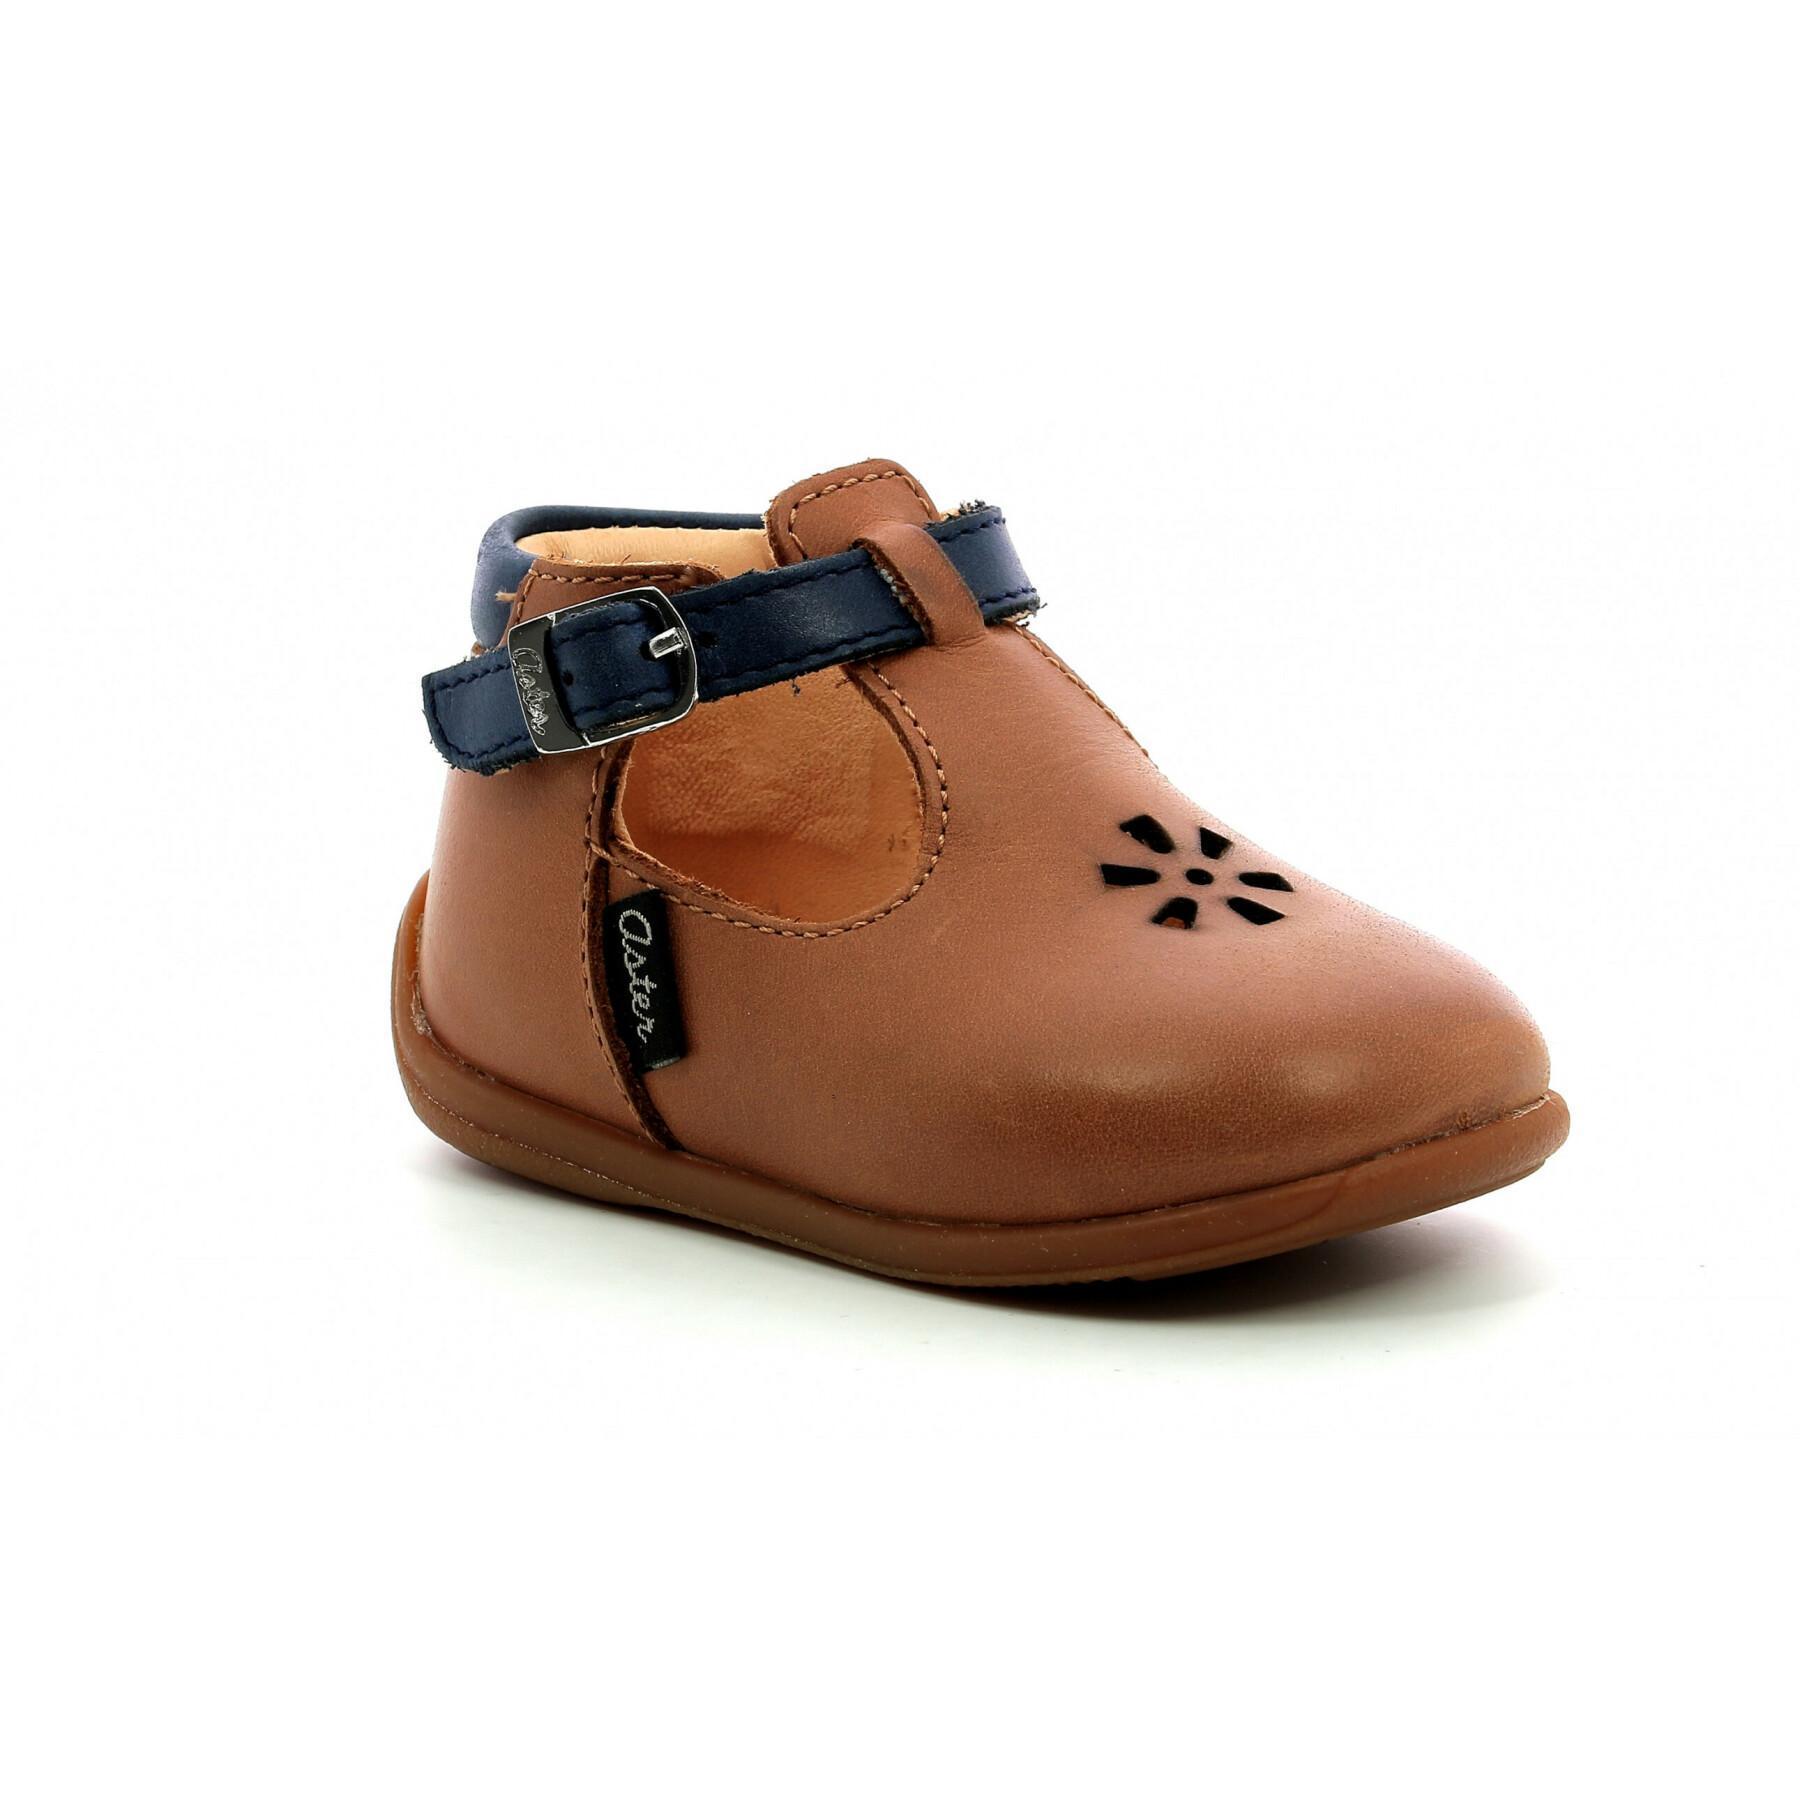 Baby sandals Aster Odjumbo